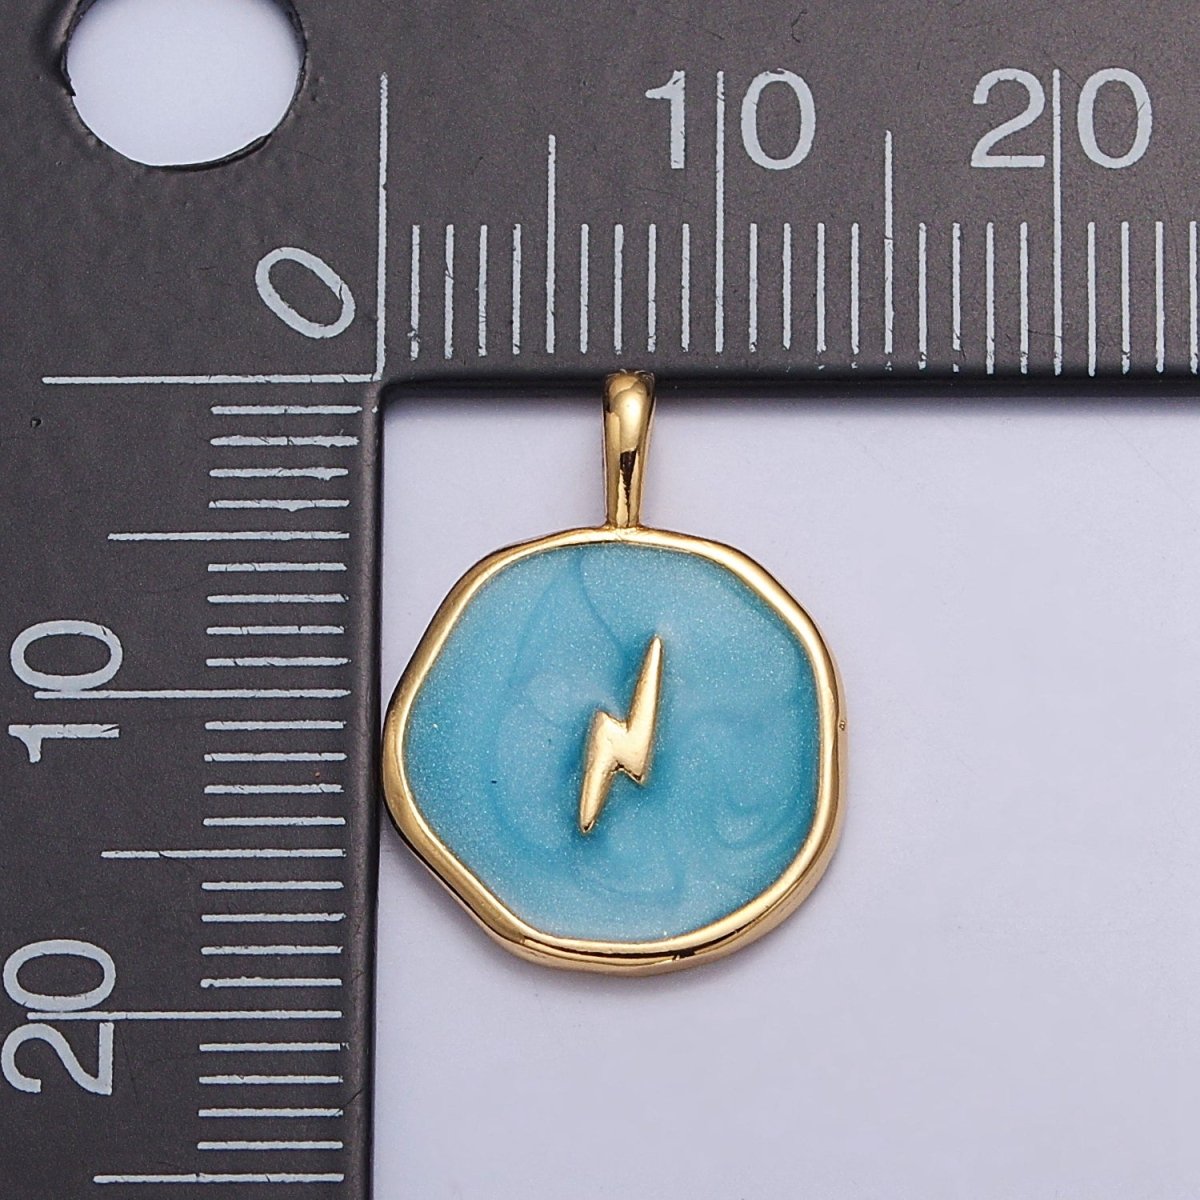 Teal Enamel Lightning Bolt Medallion Charm, 14K Gold Filled Enamel Bolt Charm for Necklace Bracelet Jewelry Making Supply, 18x13mm I-080 - DLUXCA